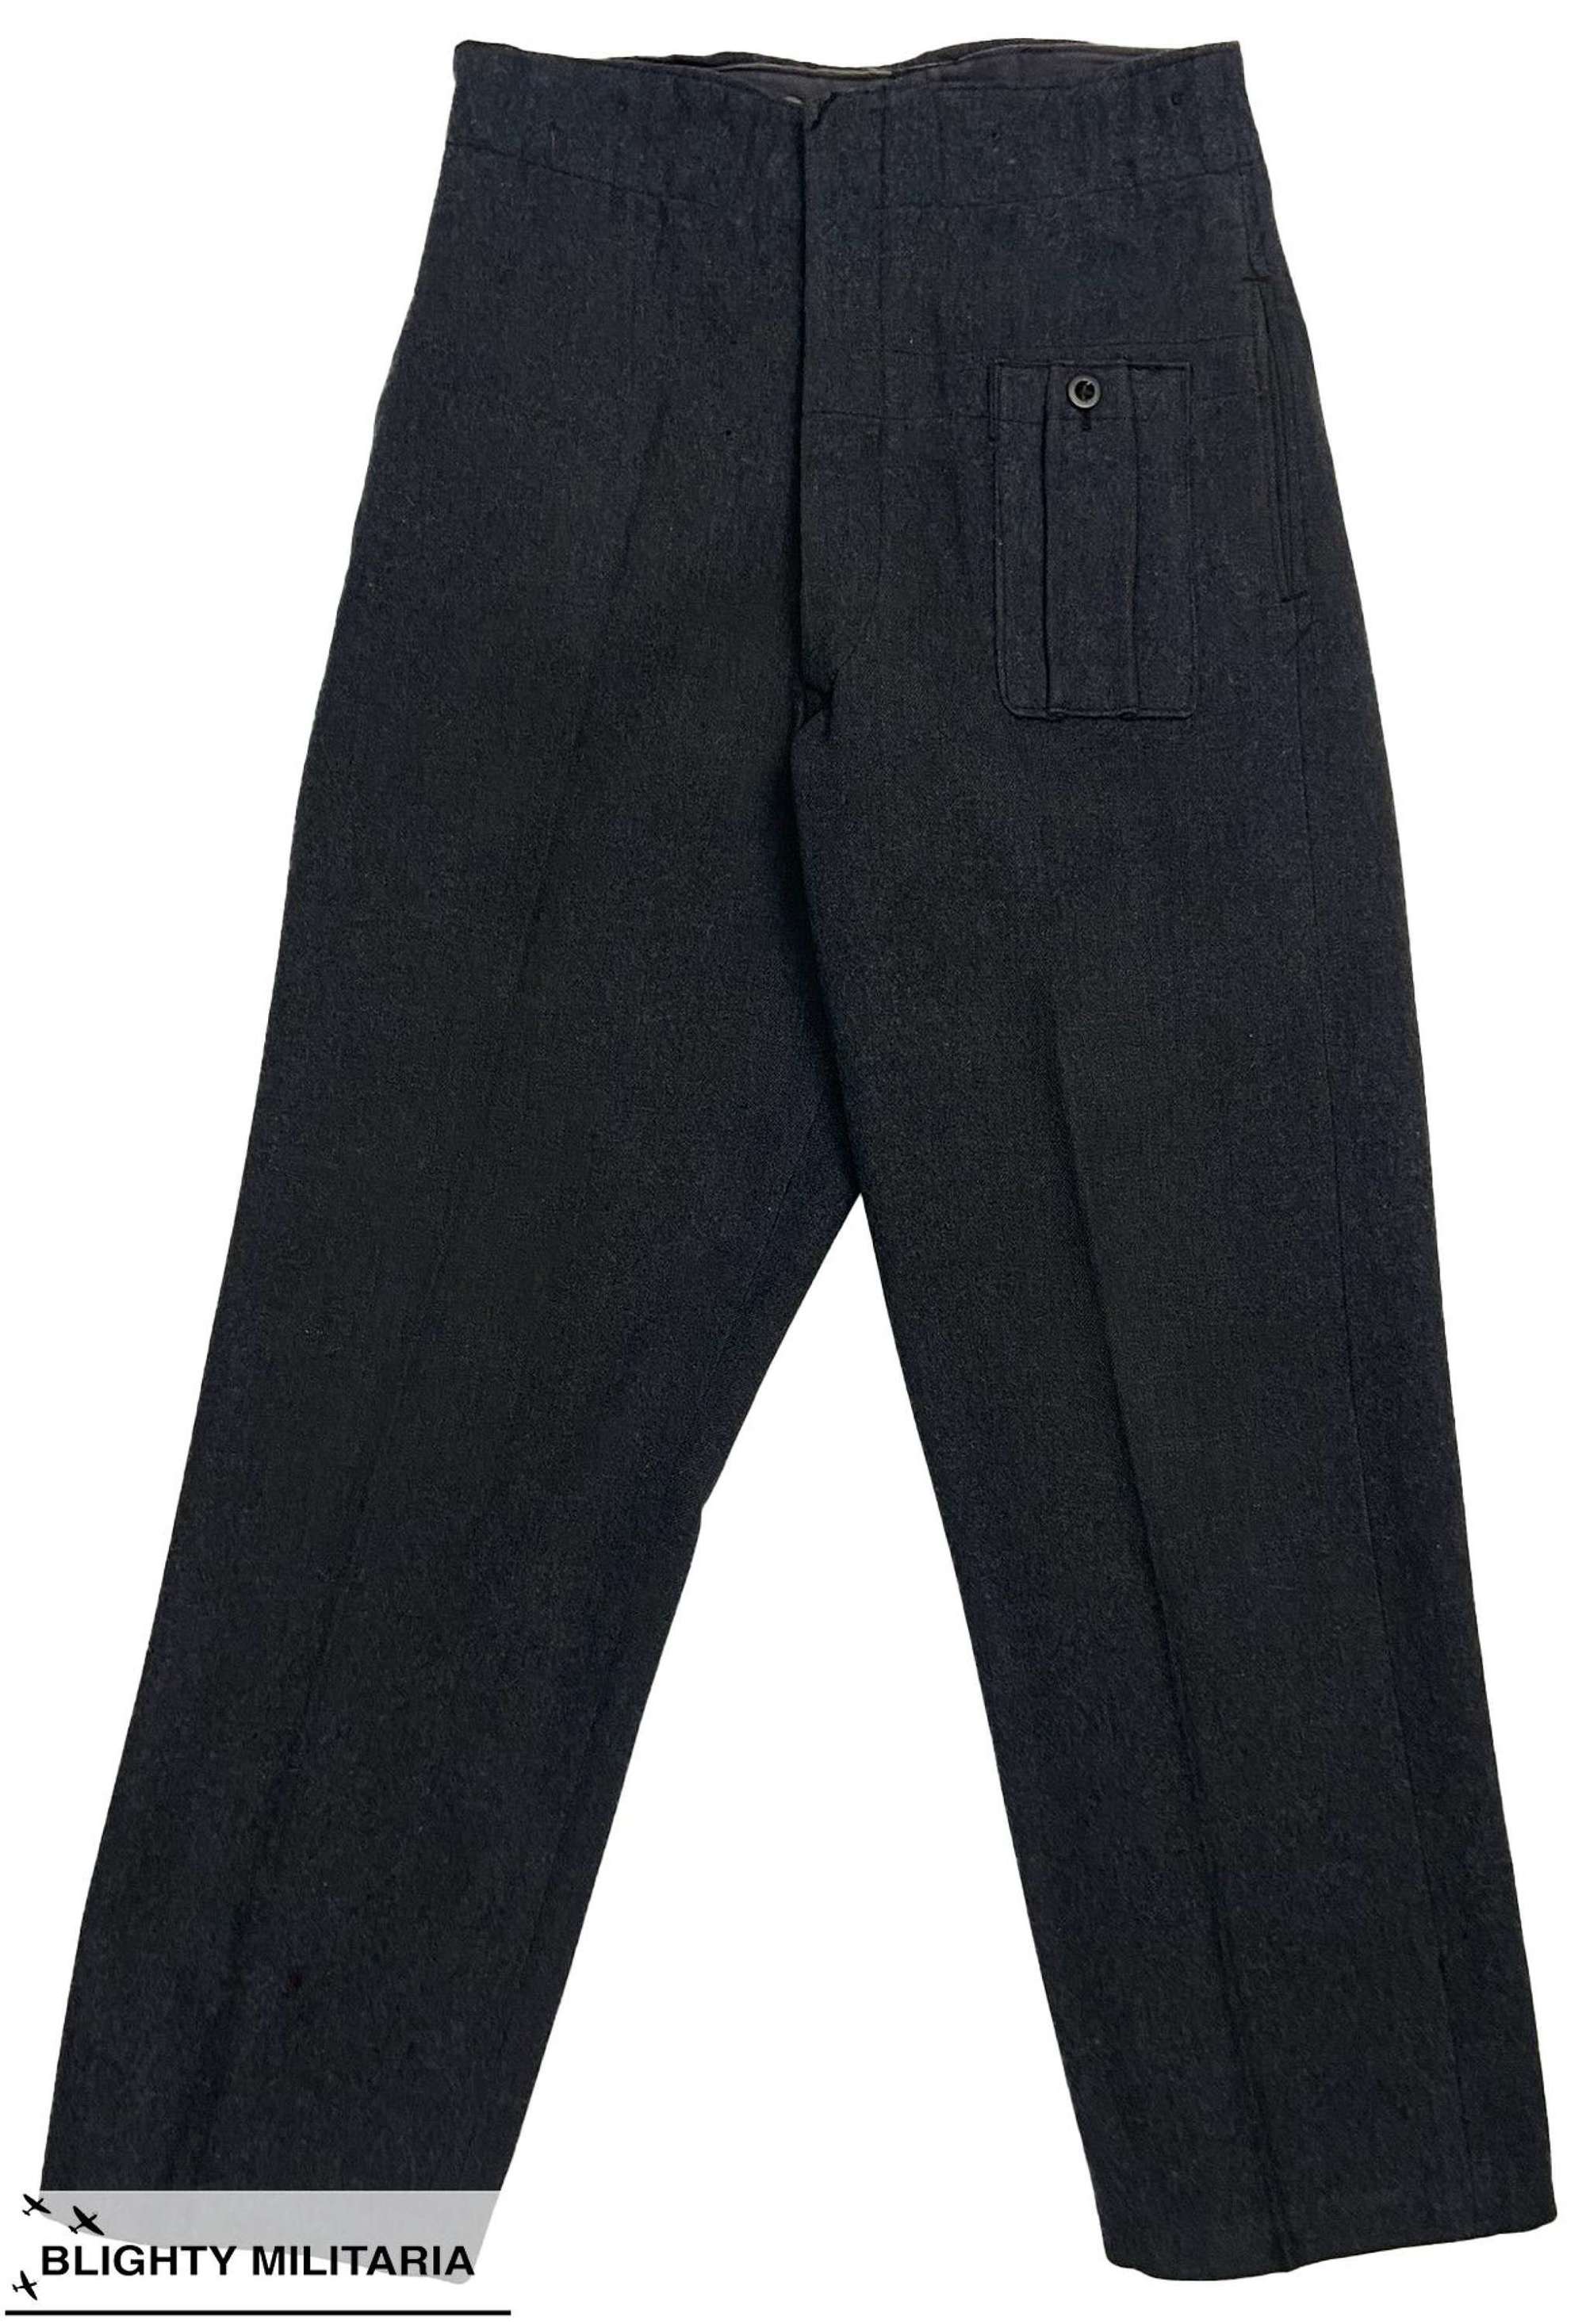 Original 1945 Dated RAF War Service Dress Trousers - Size 11